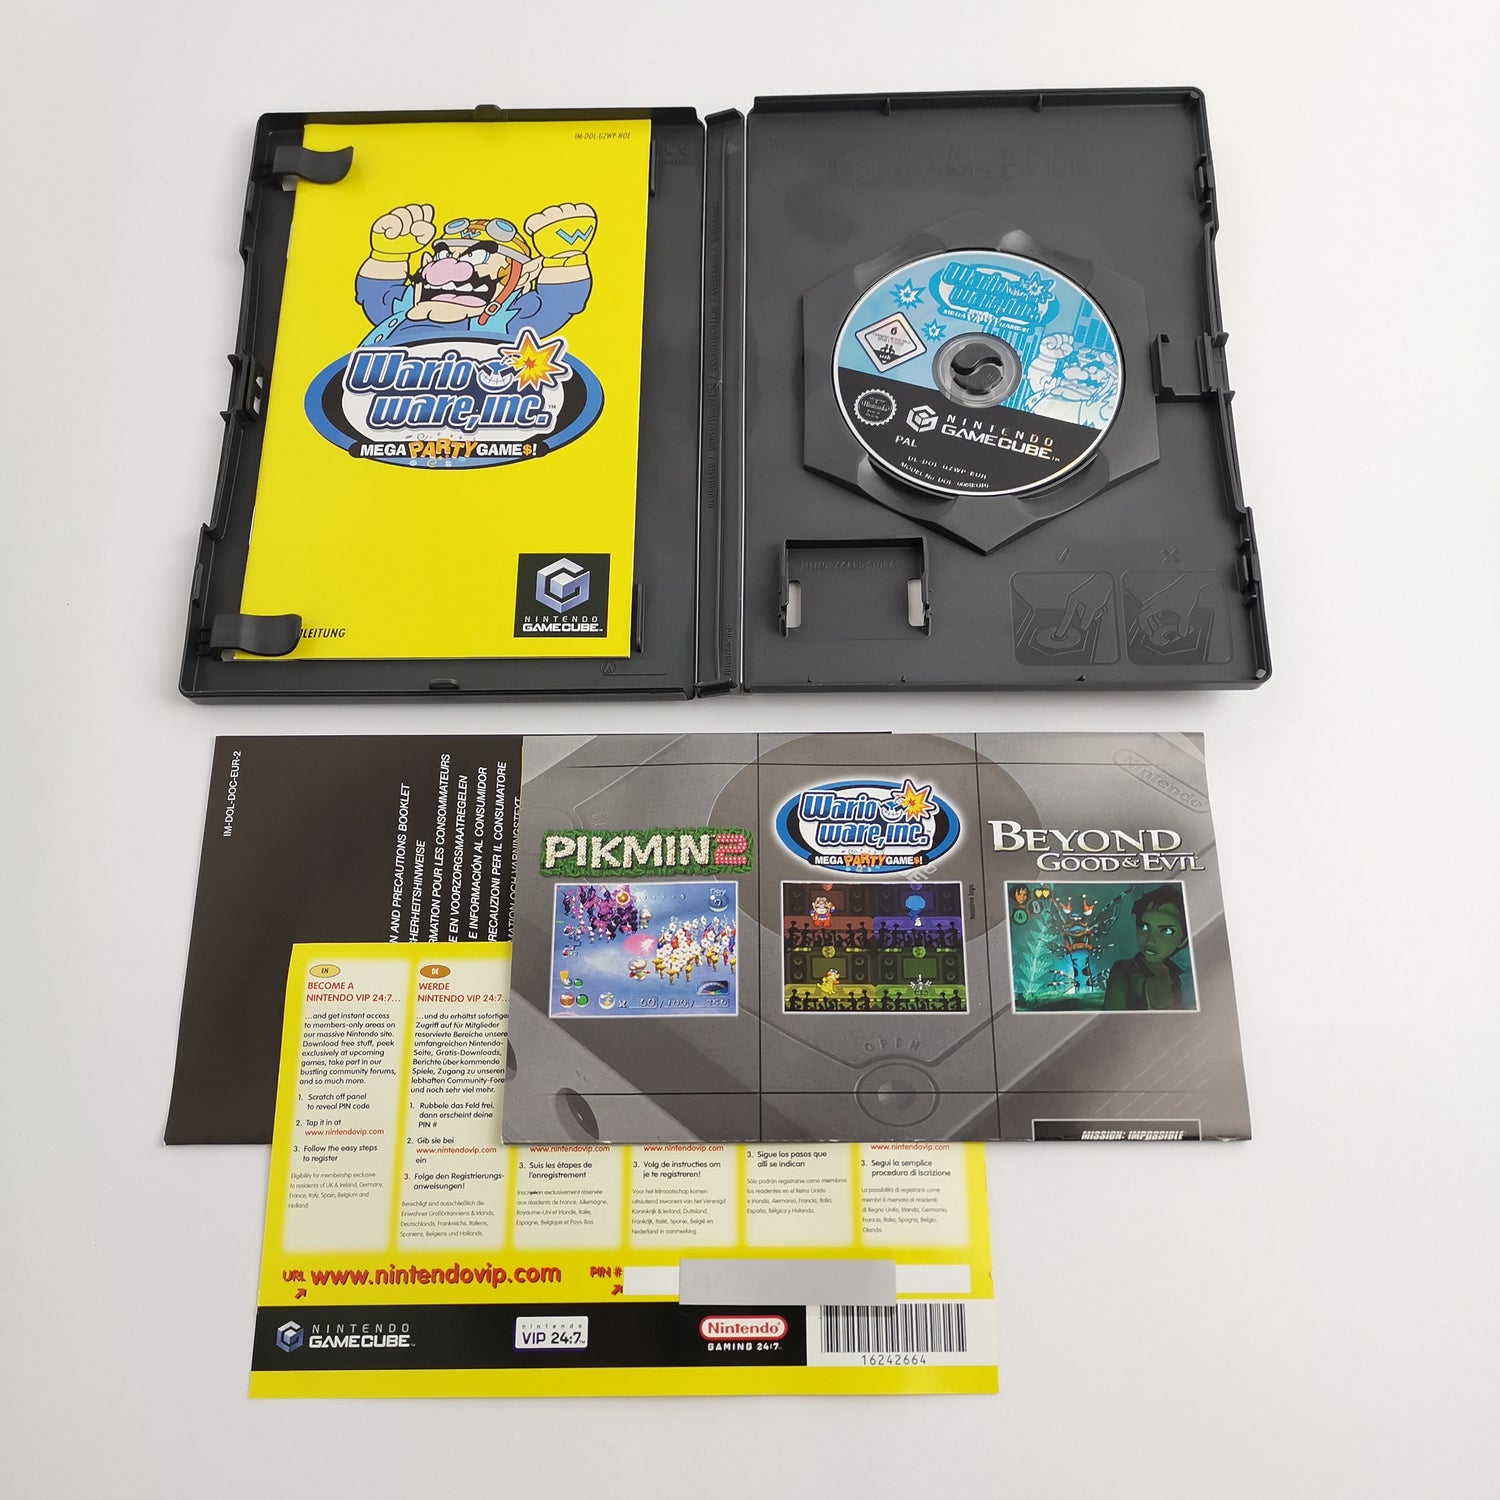 Nintendo Gamecube game: Wario Ware Inc. Mega Party Game$ original packaging - condition selectable